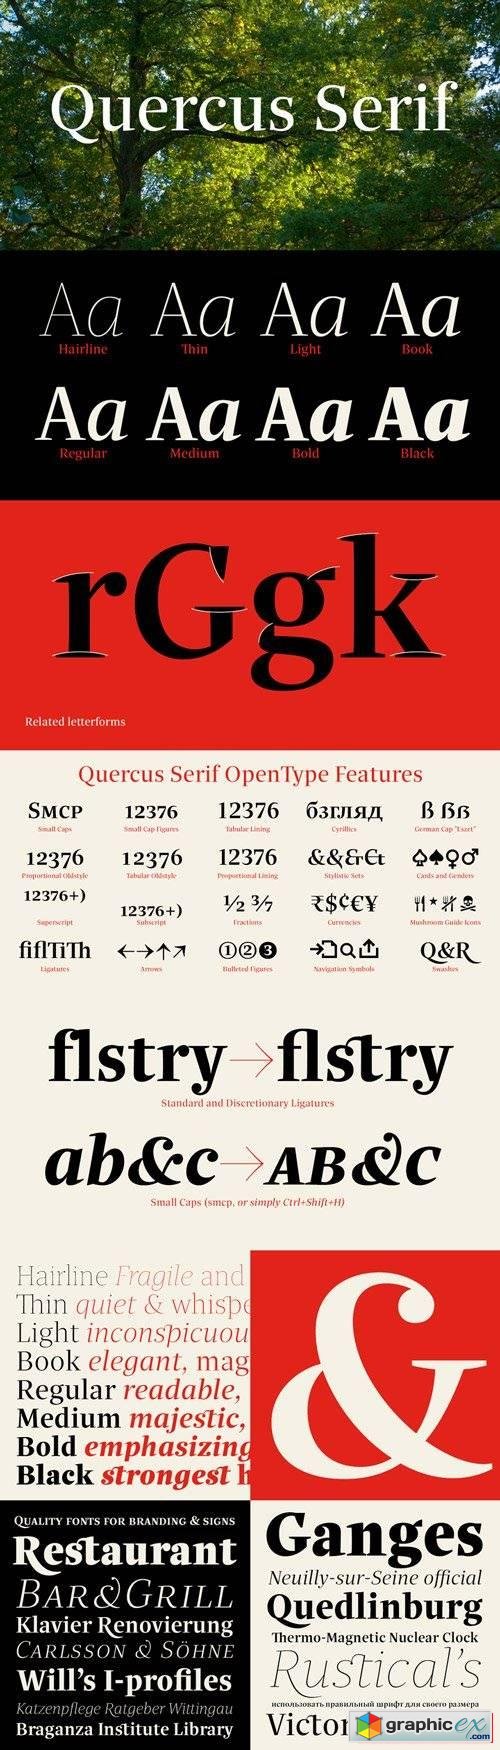 Quercus Serif Font Family $349